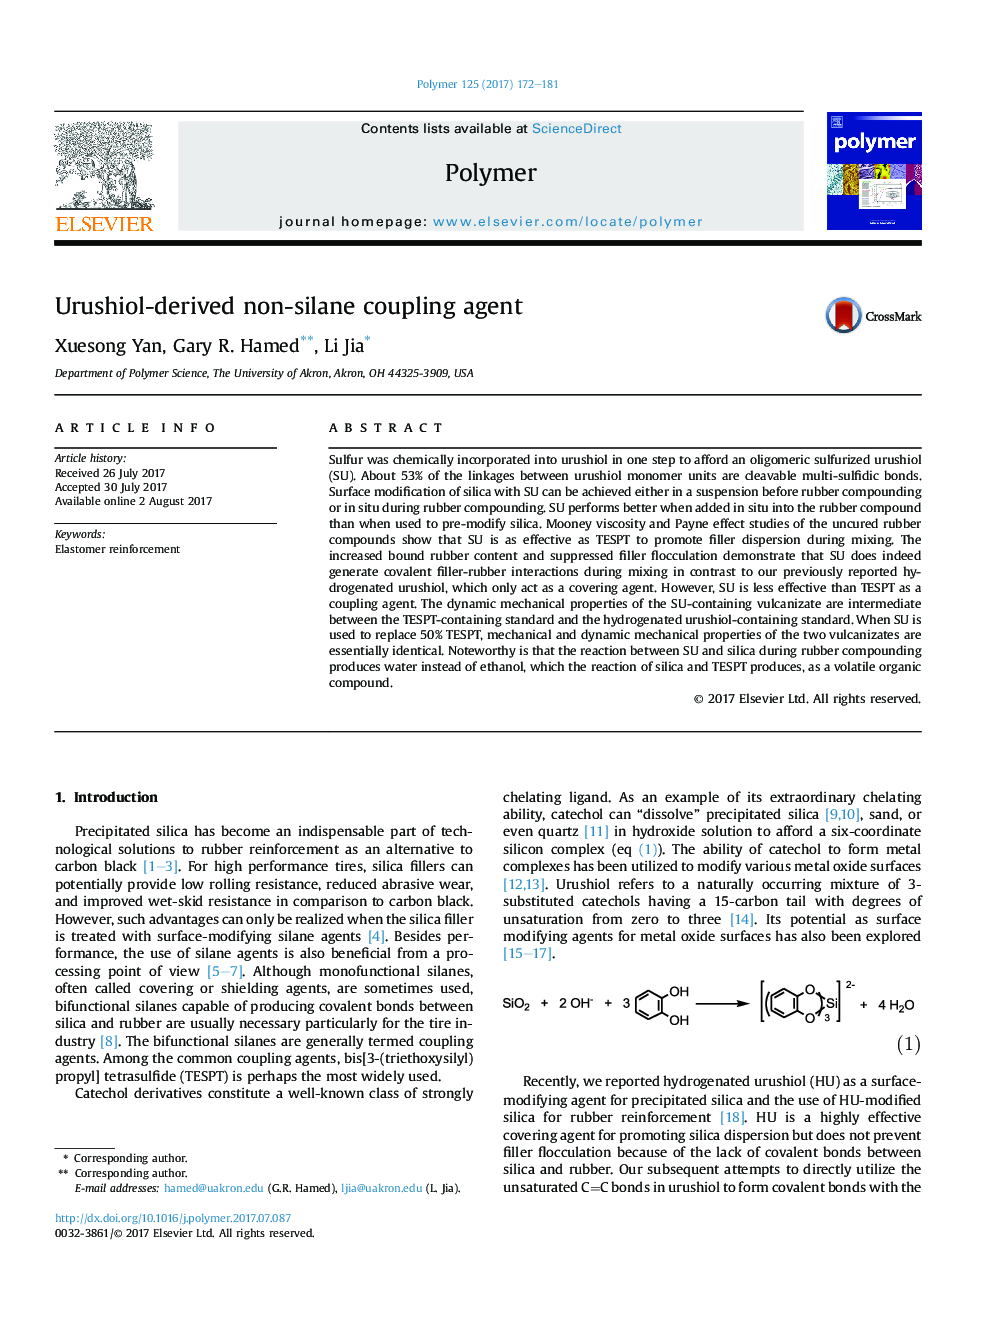 Urushiol-derived non-silane coupling agent